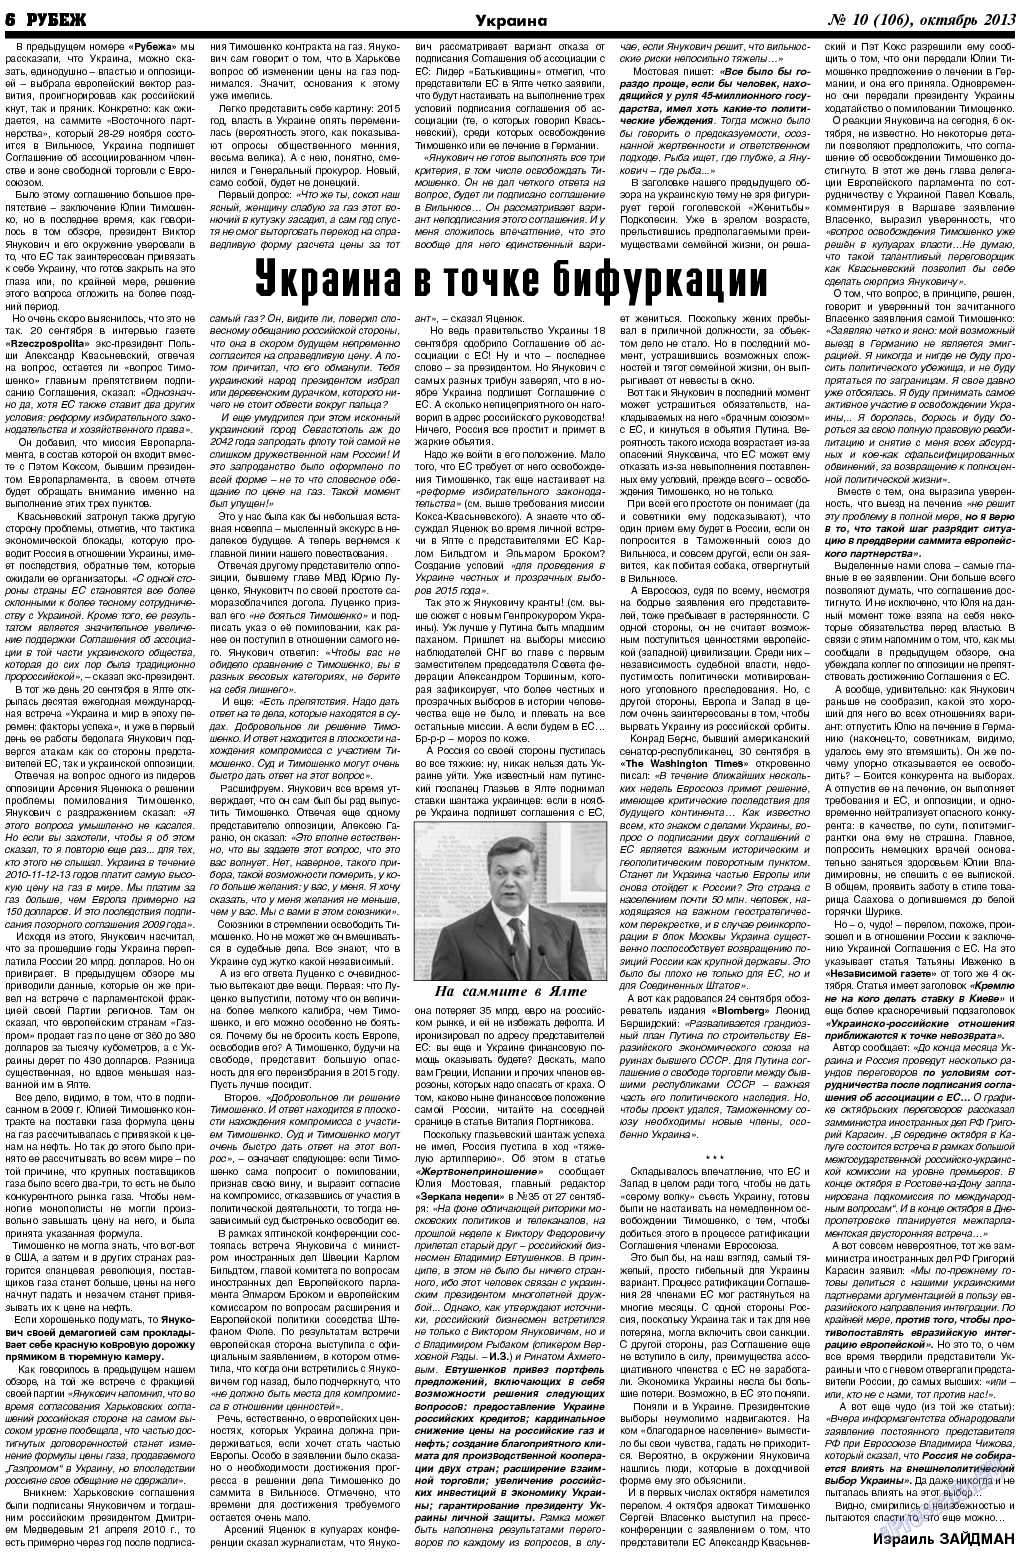 Рубеж, газета. 2013 №10 стр.6